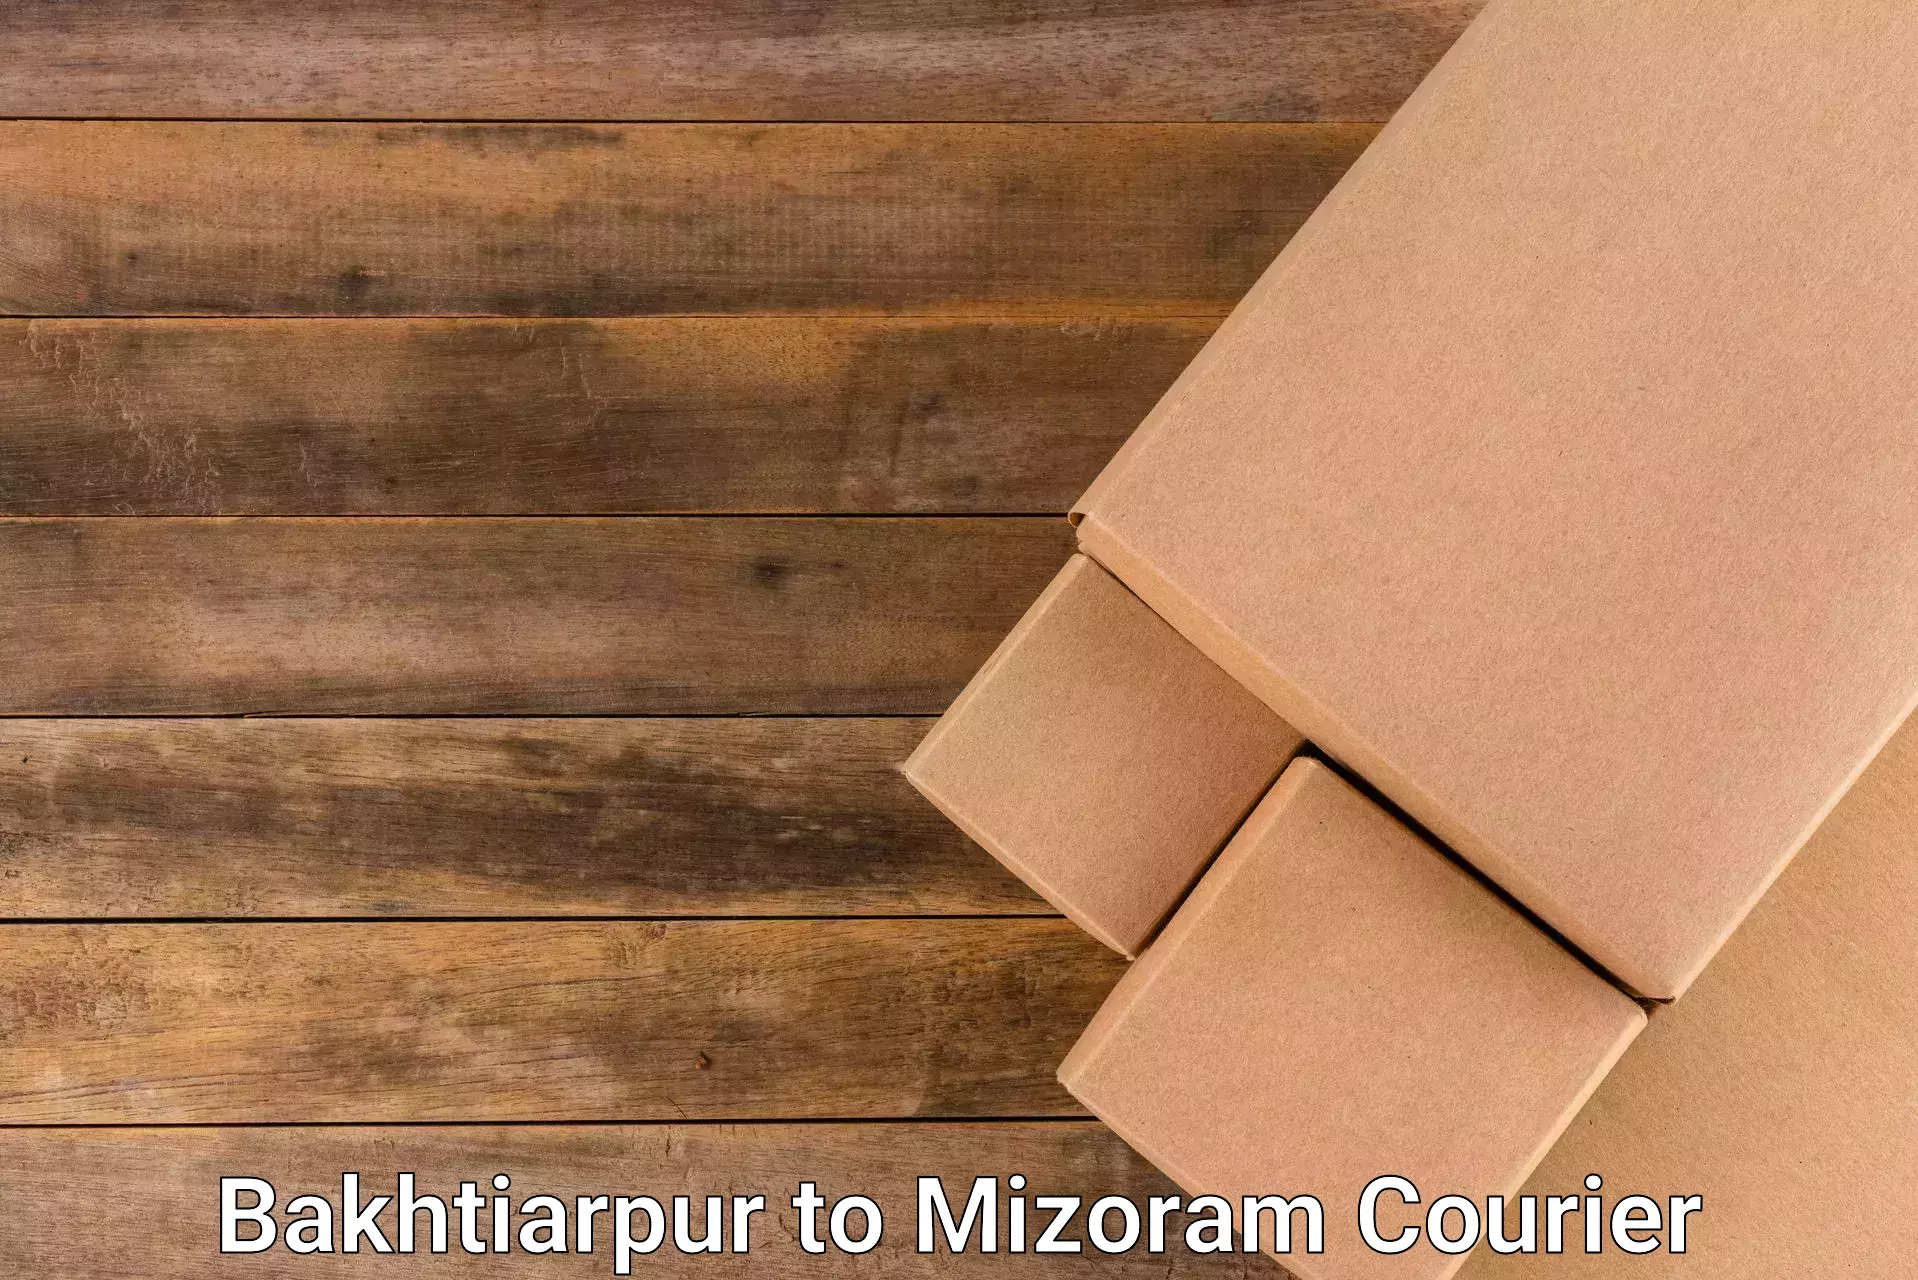 Efficient courier operations Bakhtiarpur to Aizawl